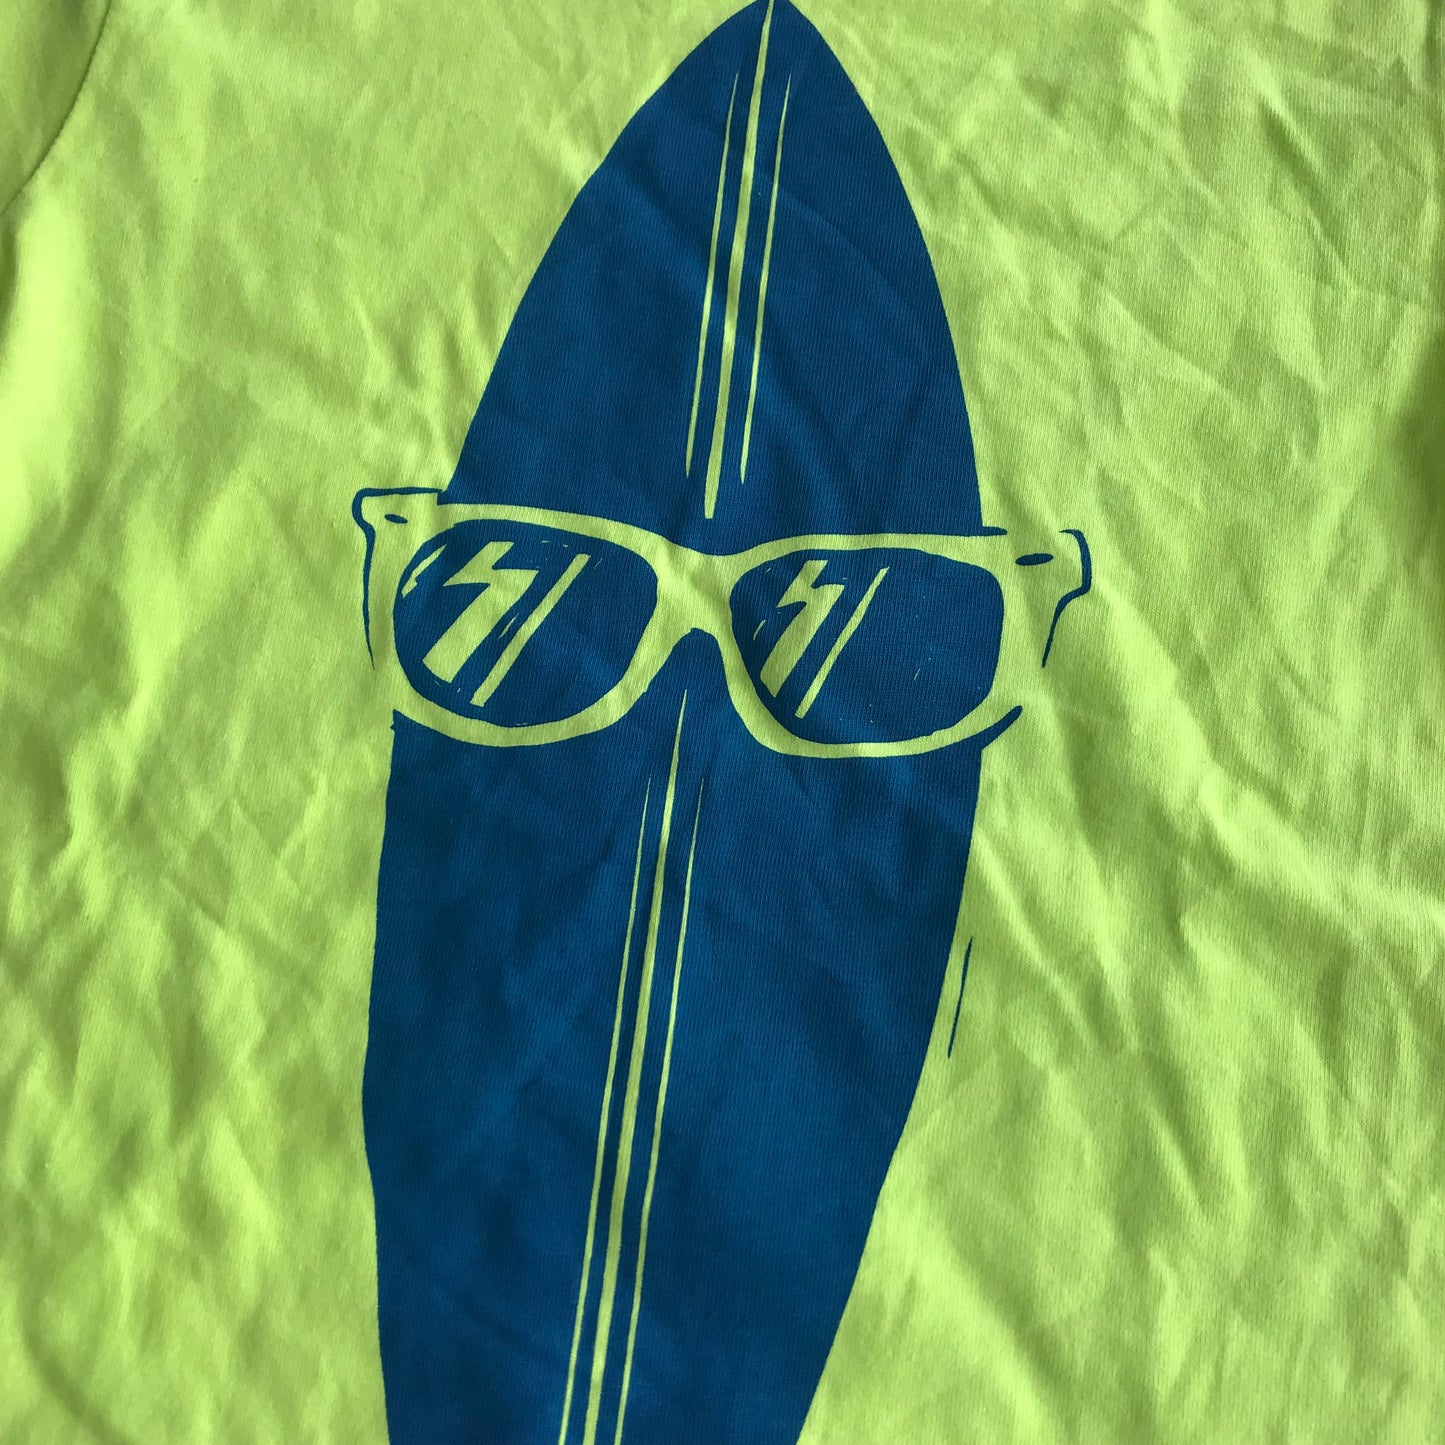 T-shirt - NEXT Neon - Age 5